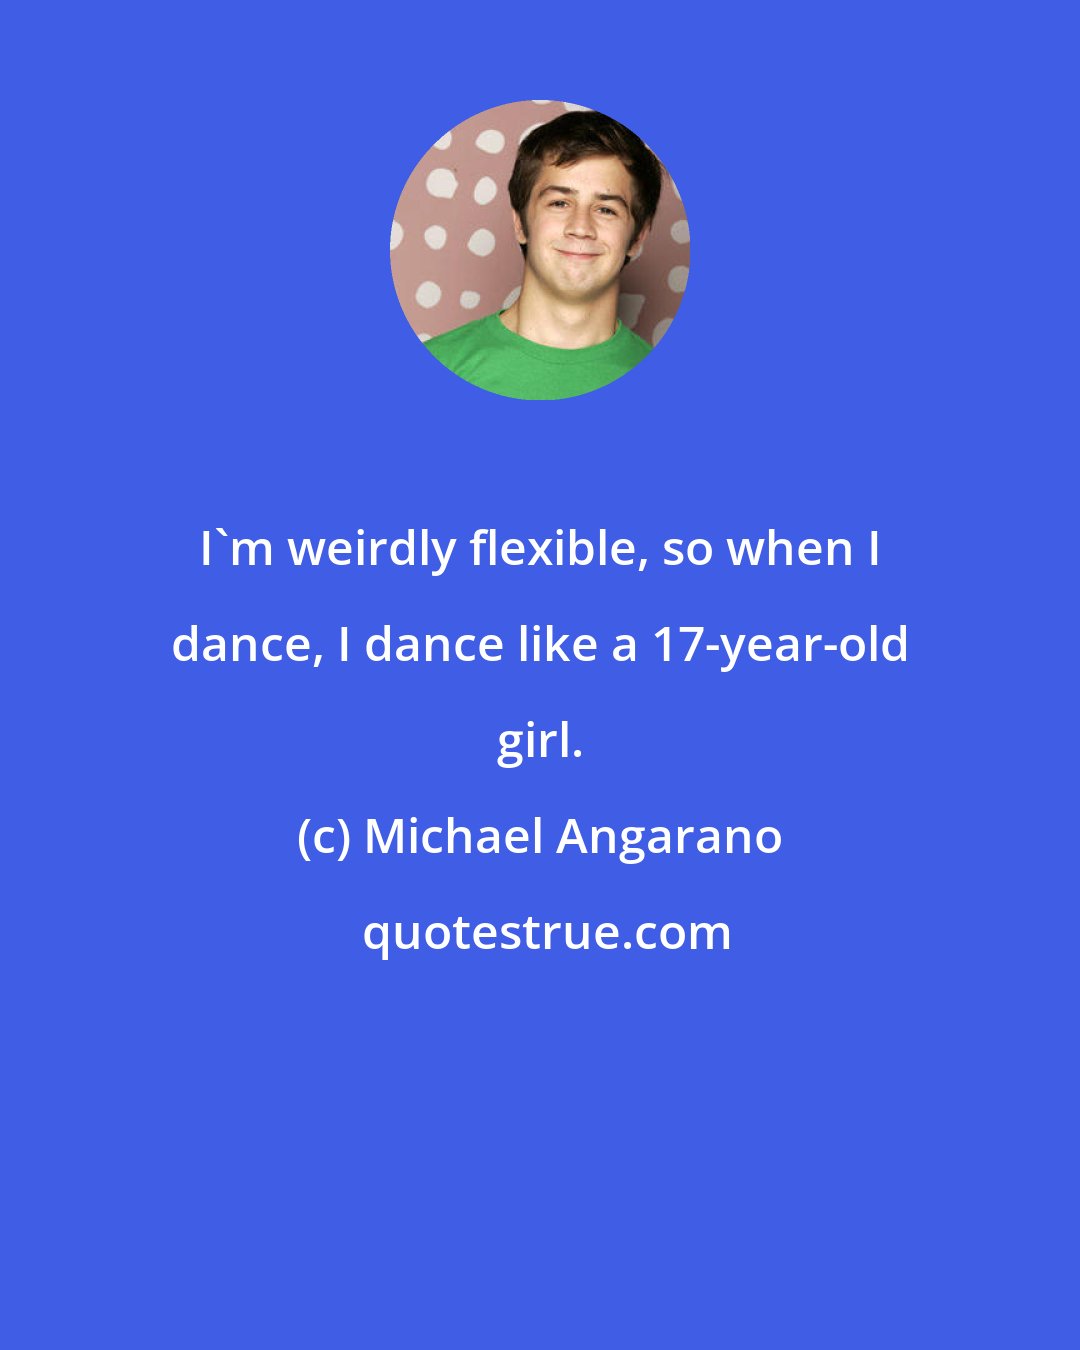 Michael Angarano: I'm weirdly flexible, so when I dance, I dance like a 17-year-old girl.